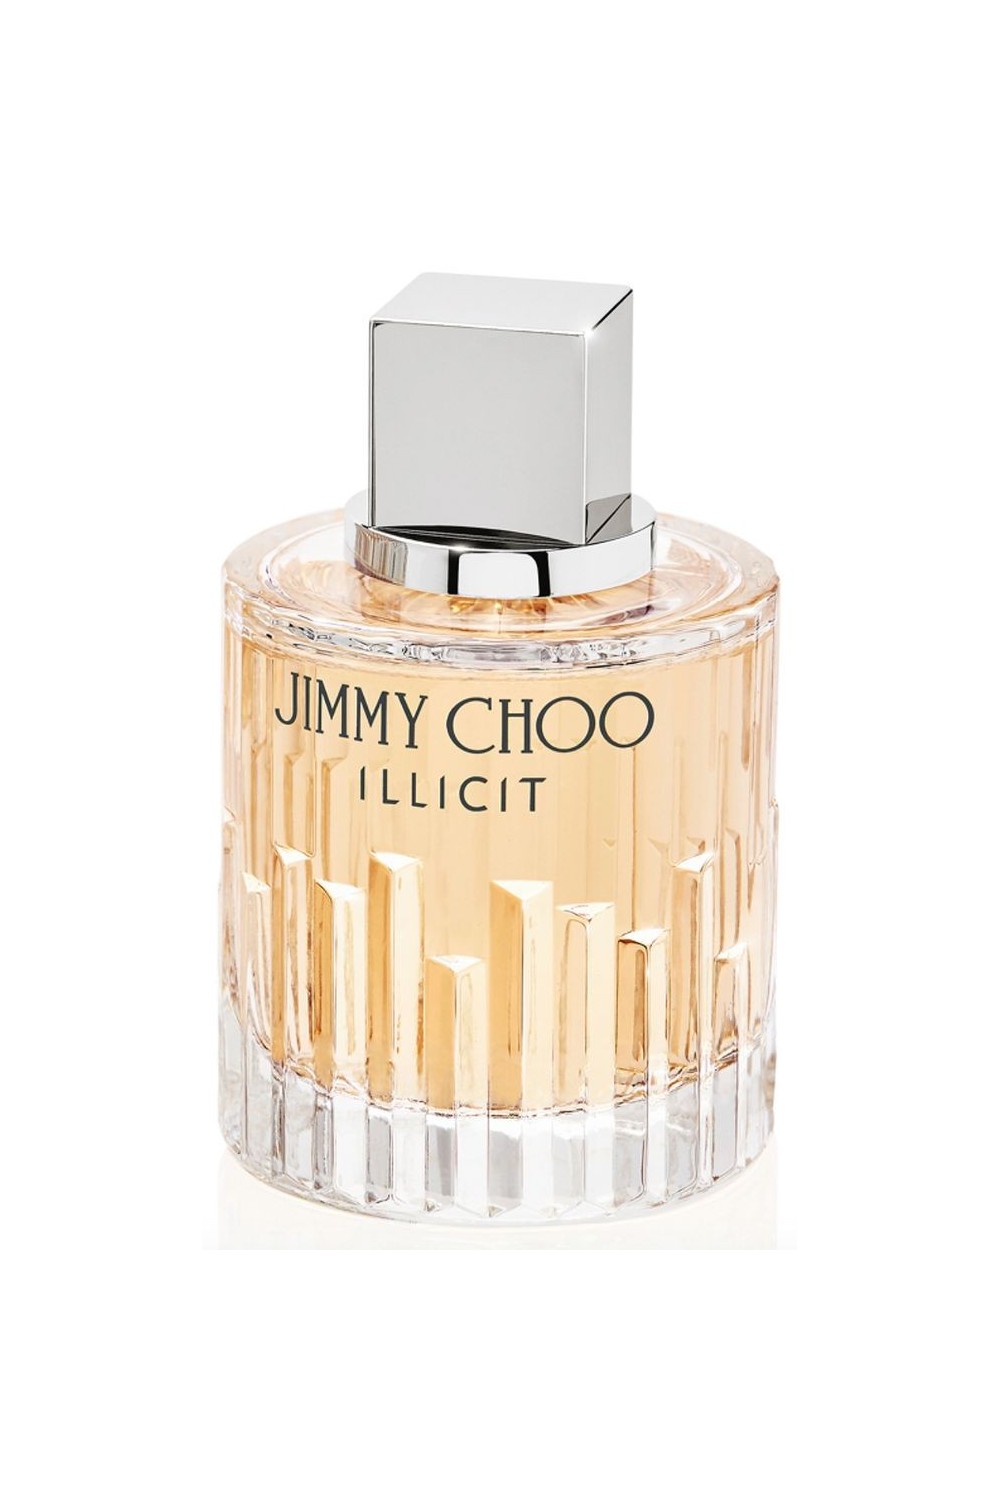 Jimmy Choo Illicit Eau De Perfume Spray 40ml